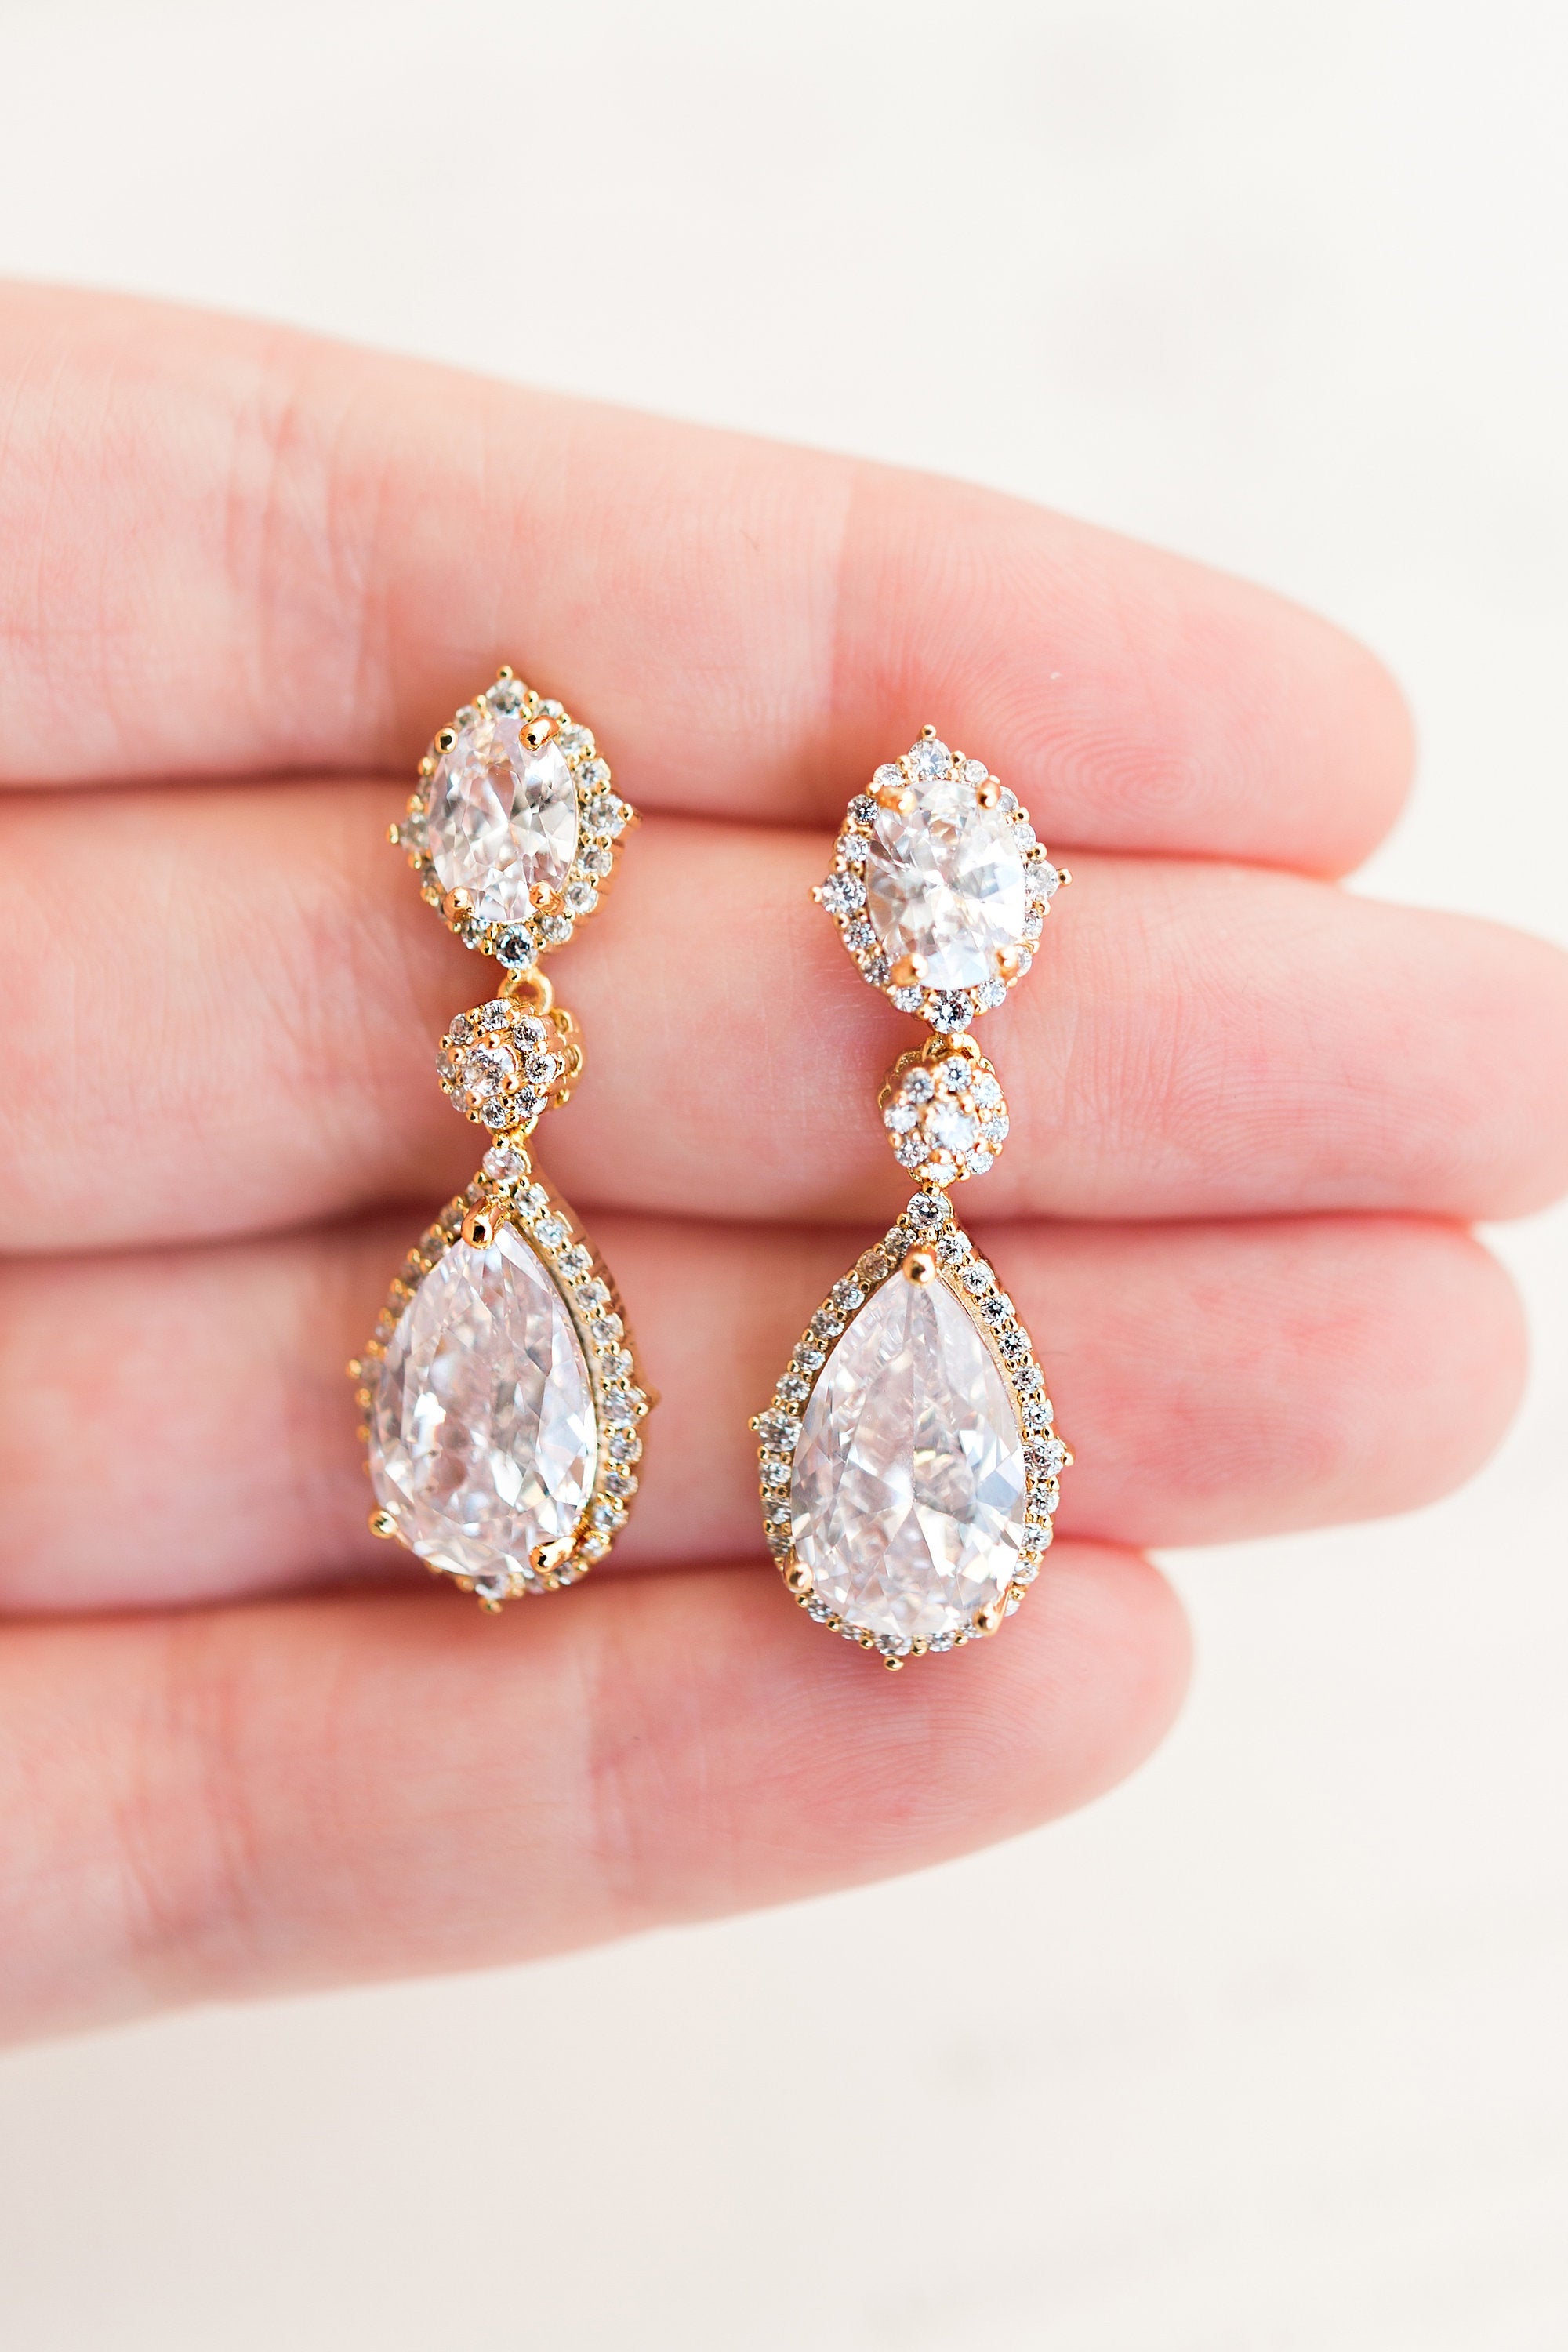 CORINA // Gold crystal wedding earrings